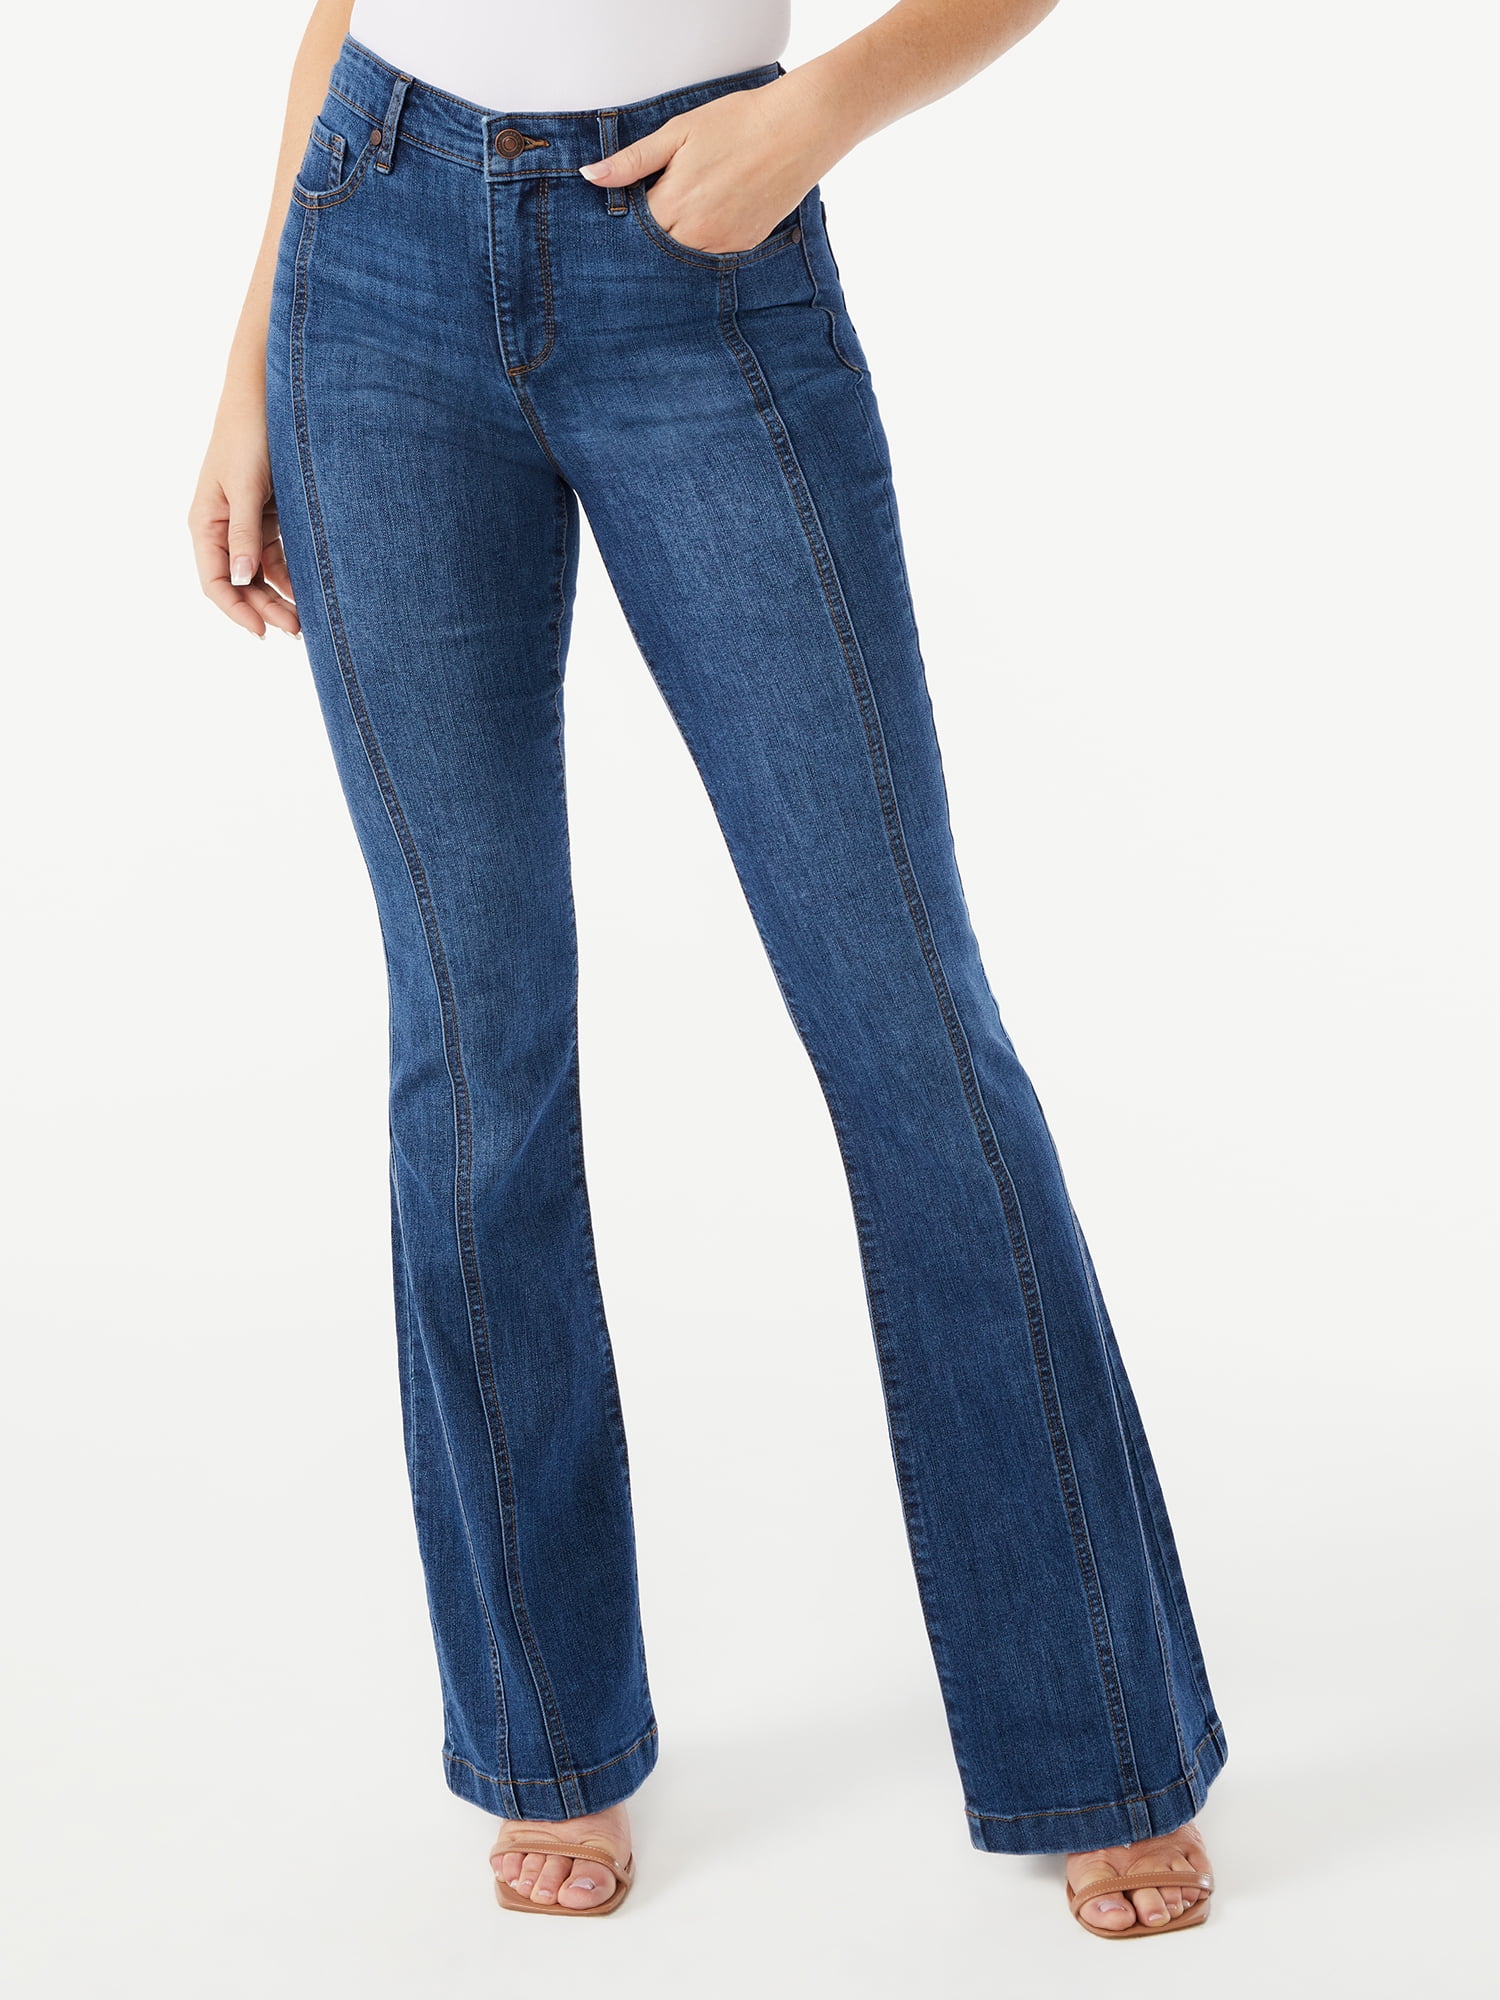 Sofia Jeans Women's Melisa Flare High Rise Seam Detail Jeans - Walmart.com